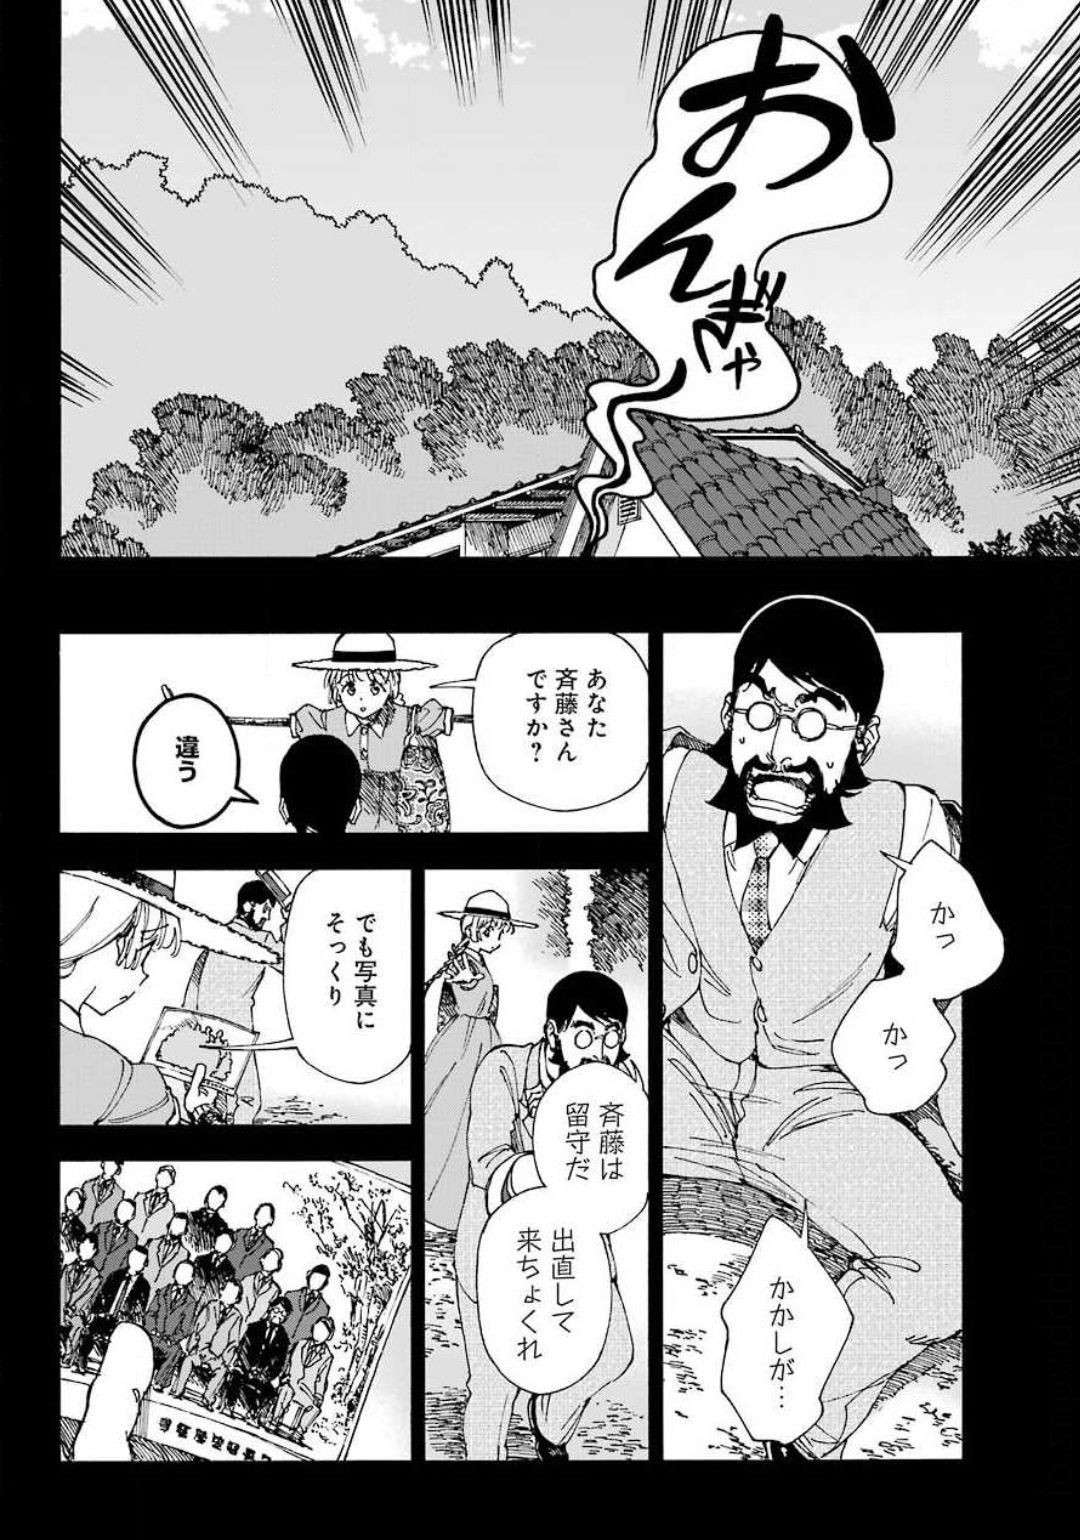 Hotomeku-kakashi - Chapter 07-1 - Page 8